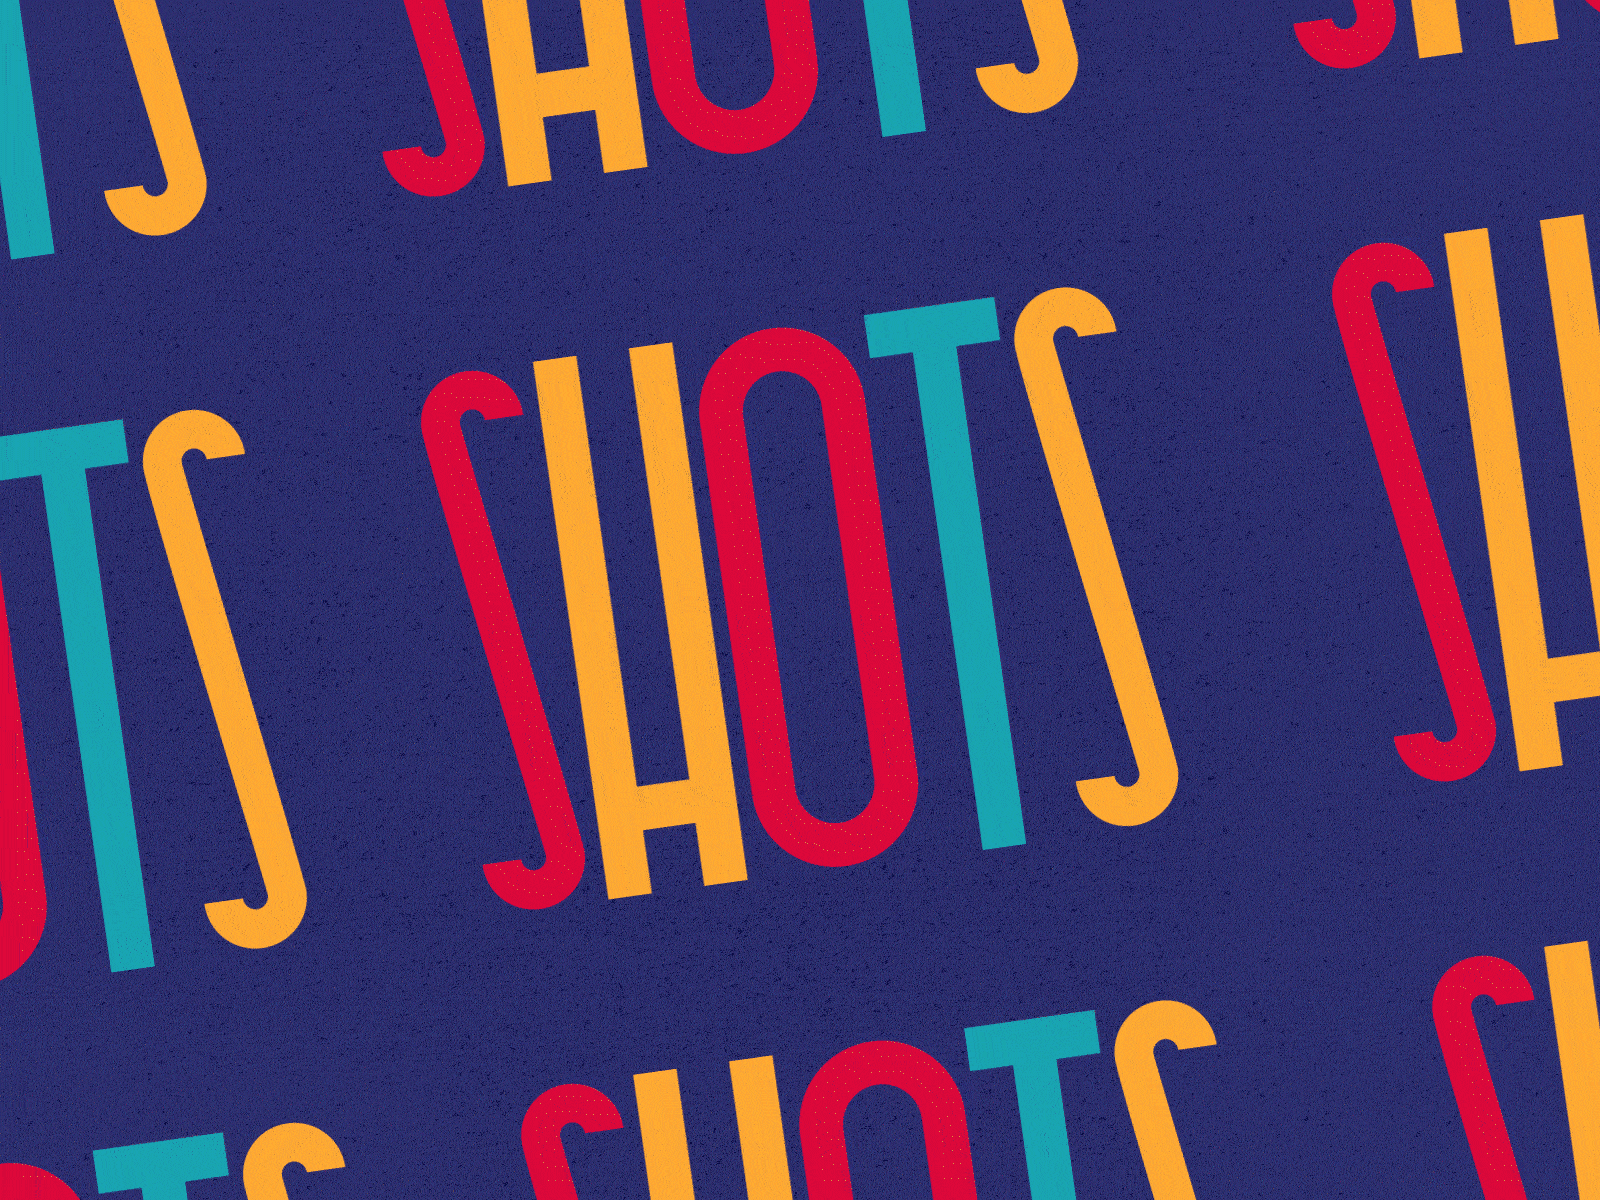 SHOTS! SHOTS! SHOTS! – Instagram/Giphy Sticker